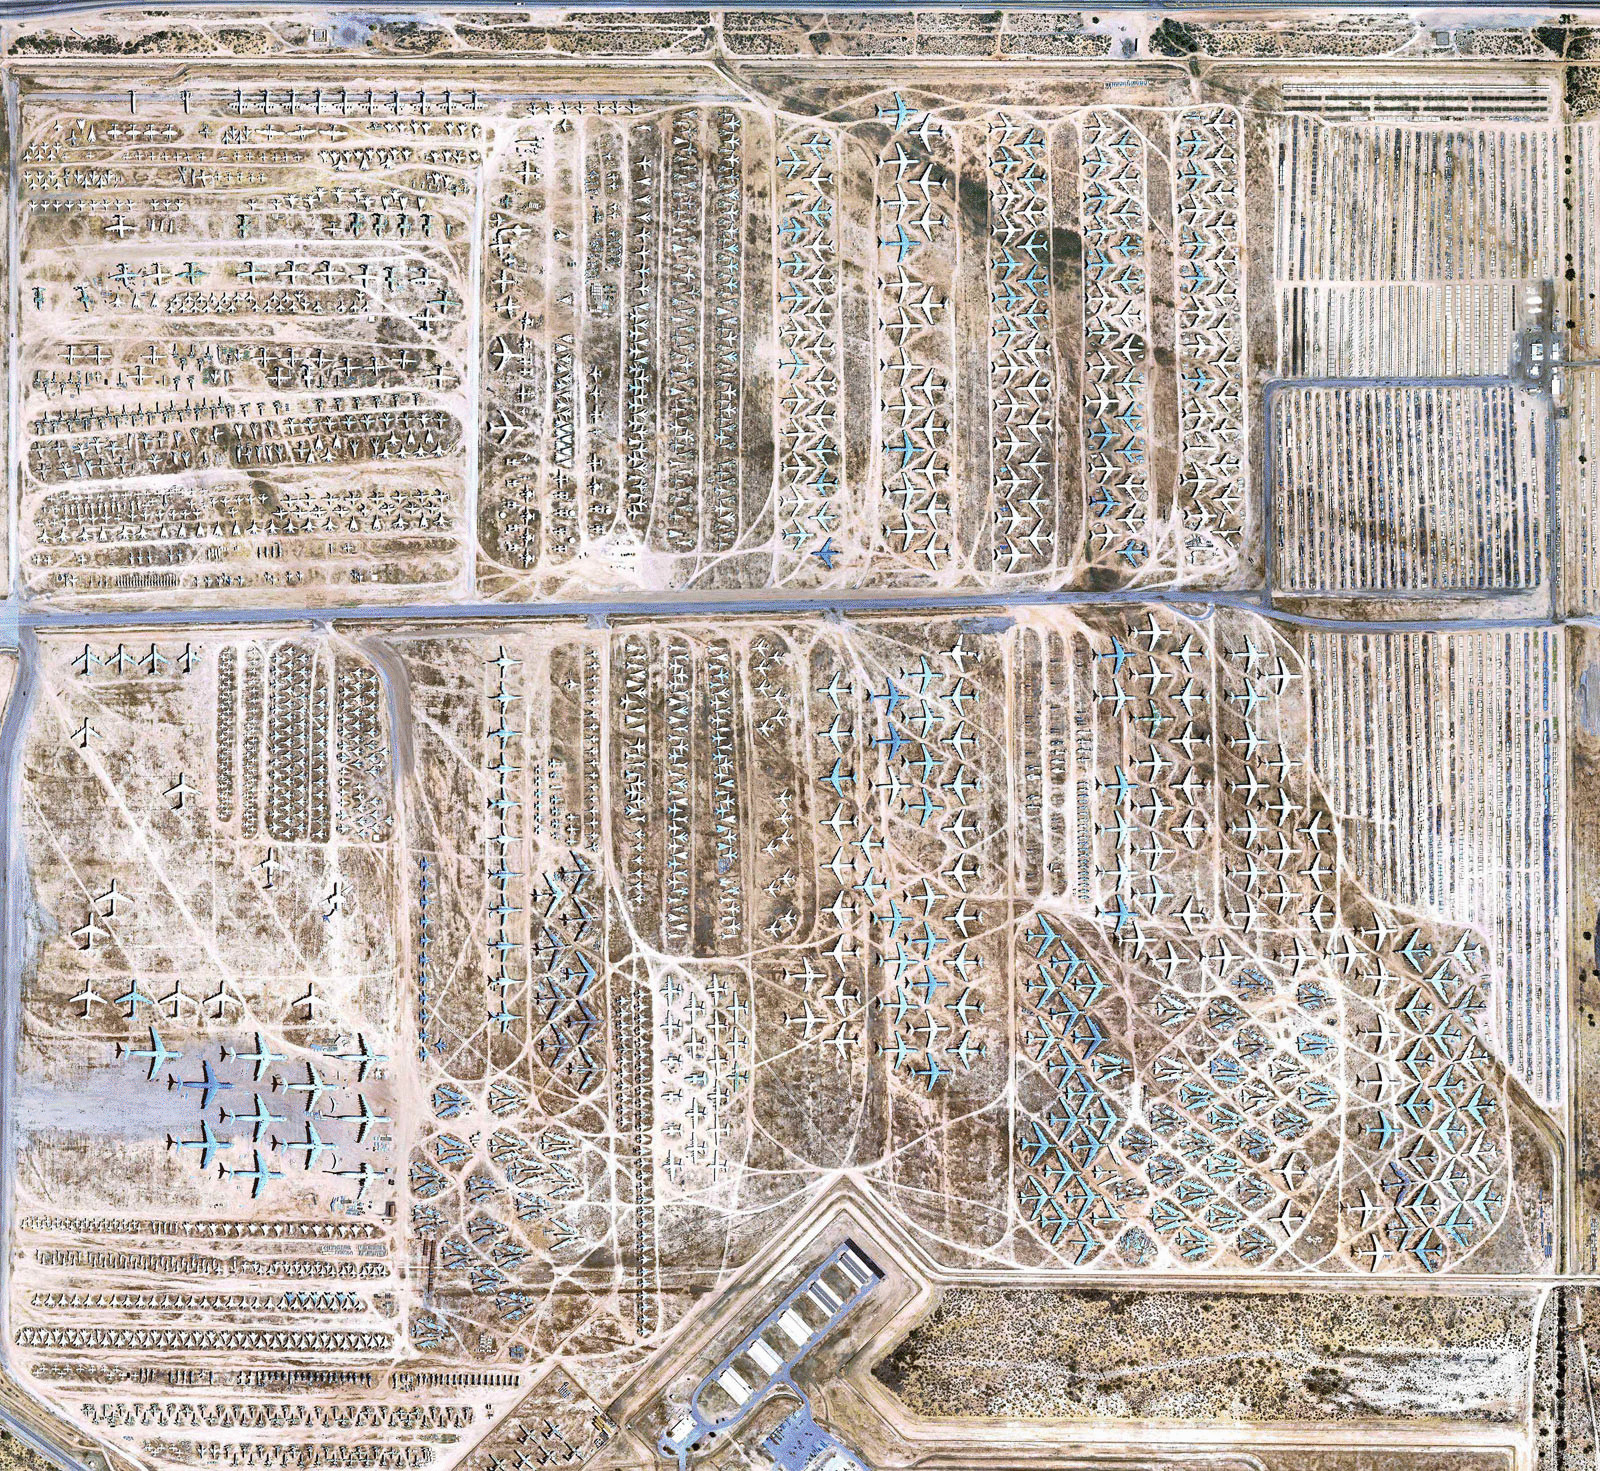 2,600-acre "Boneyard" airplane graveyard at Davis-Monthan Air Force Base, AZ